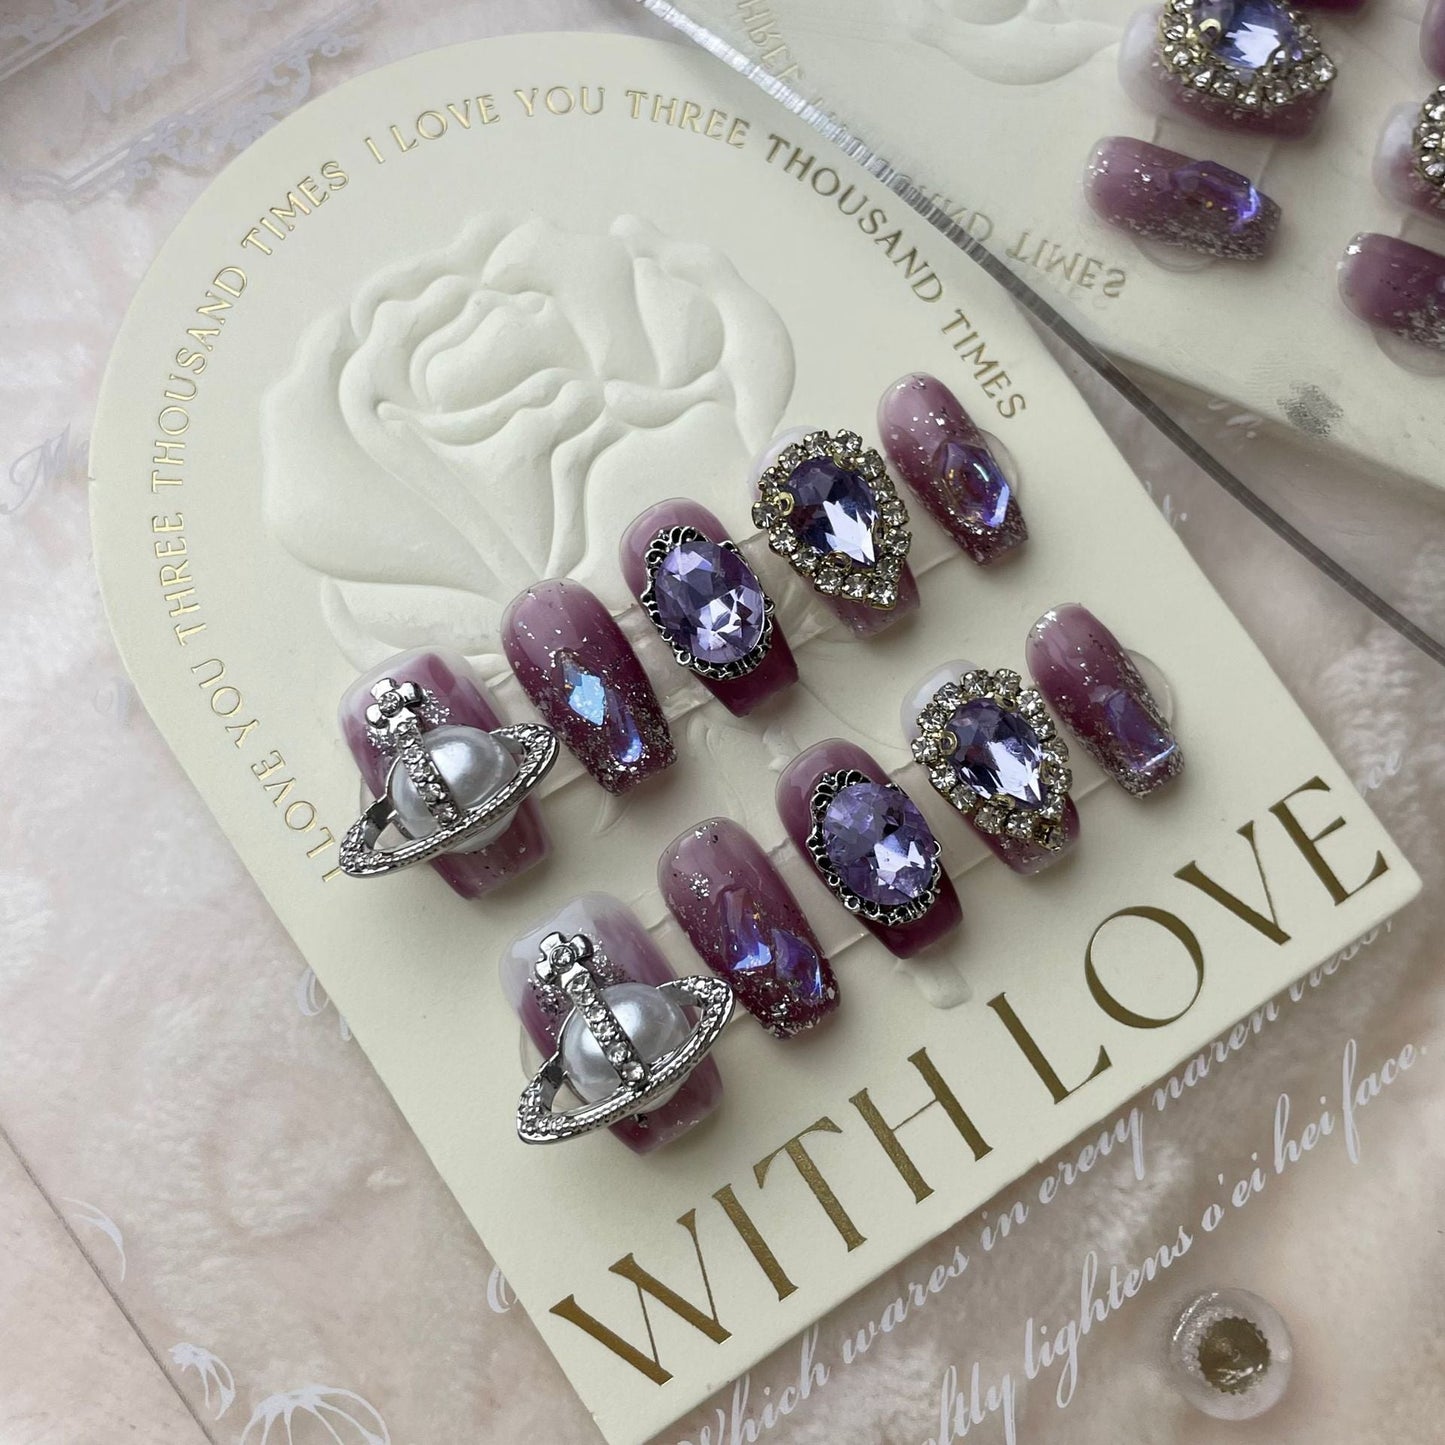 609/610 Rhinestone press on nails 100% handmade false nails purple